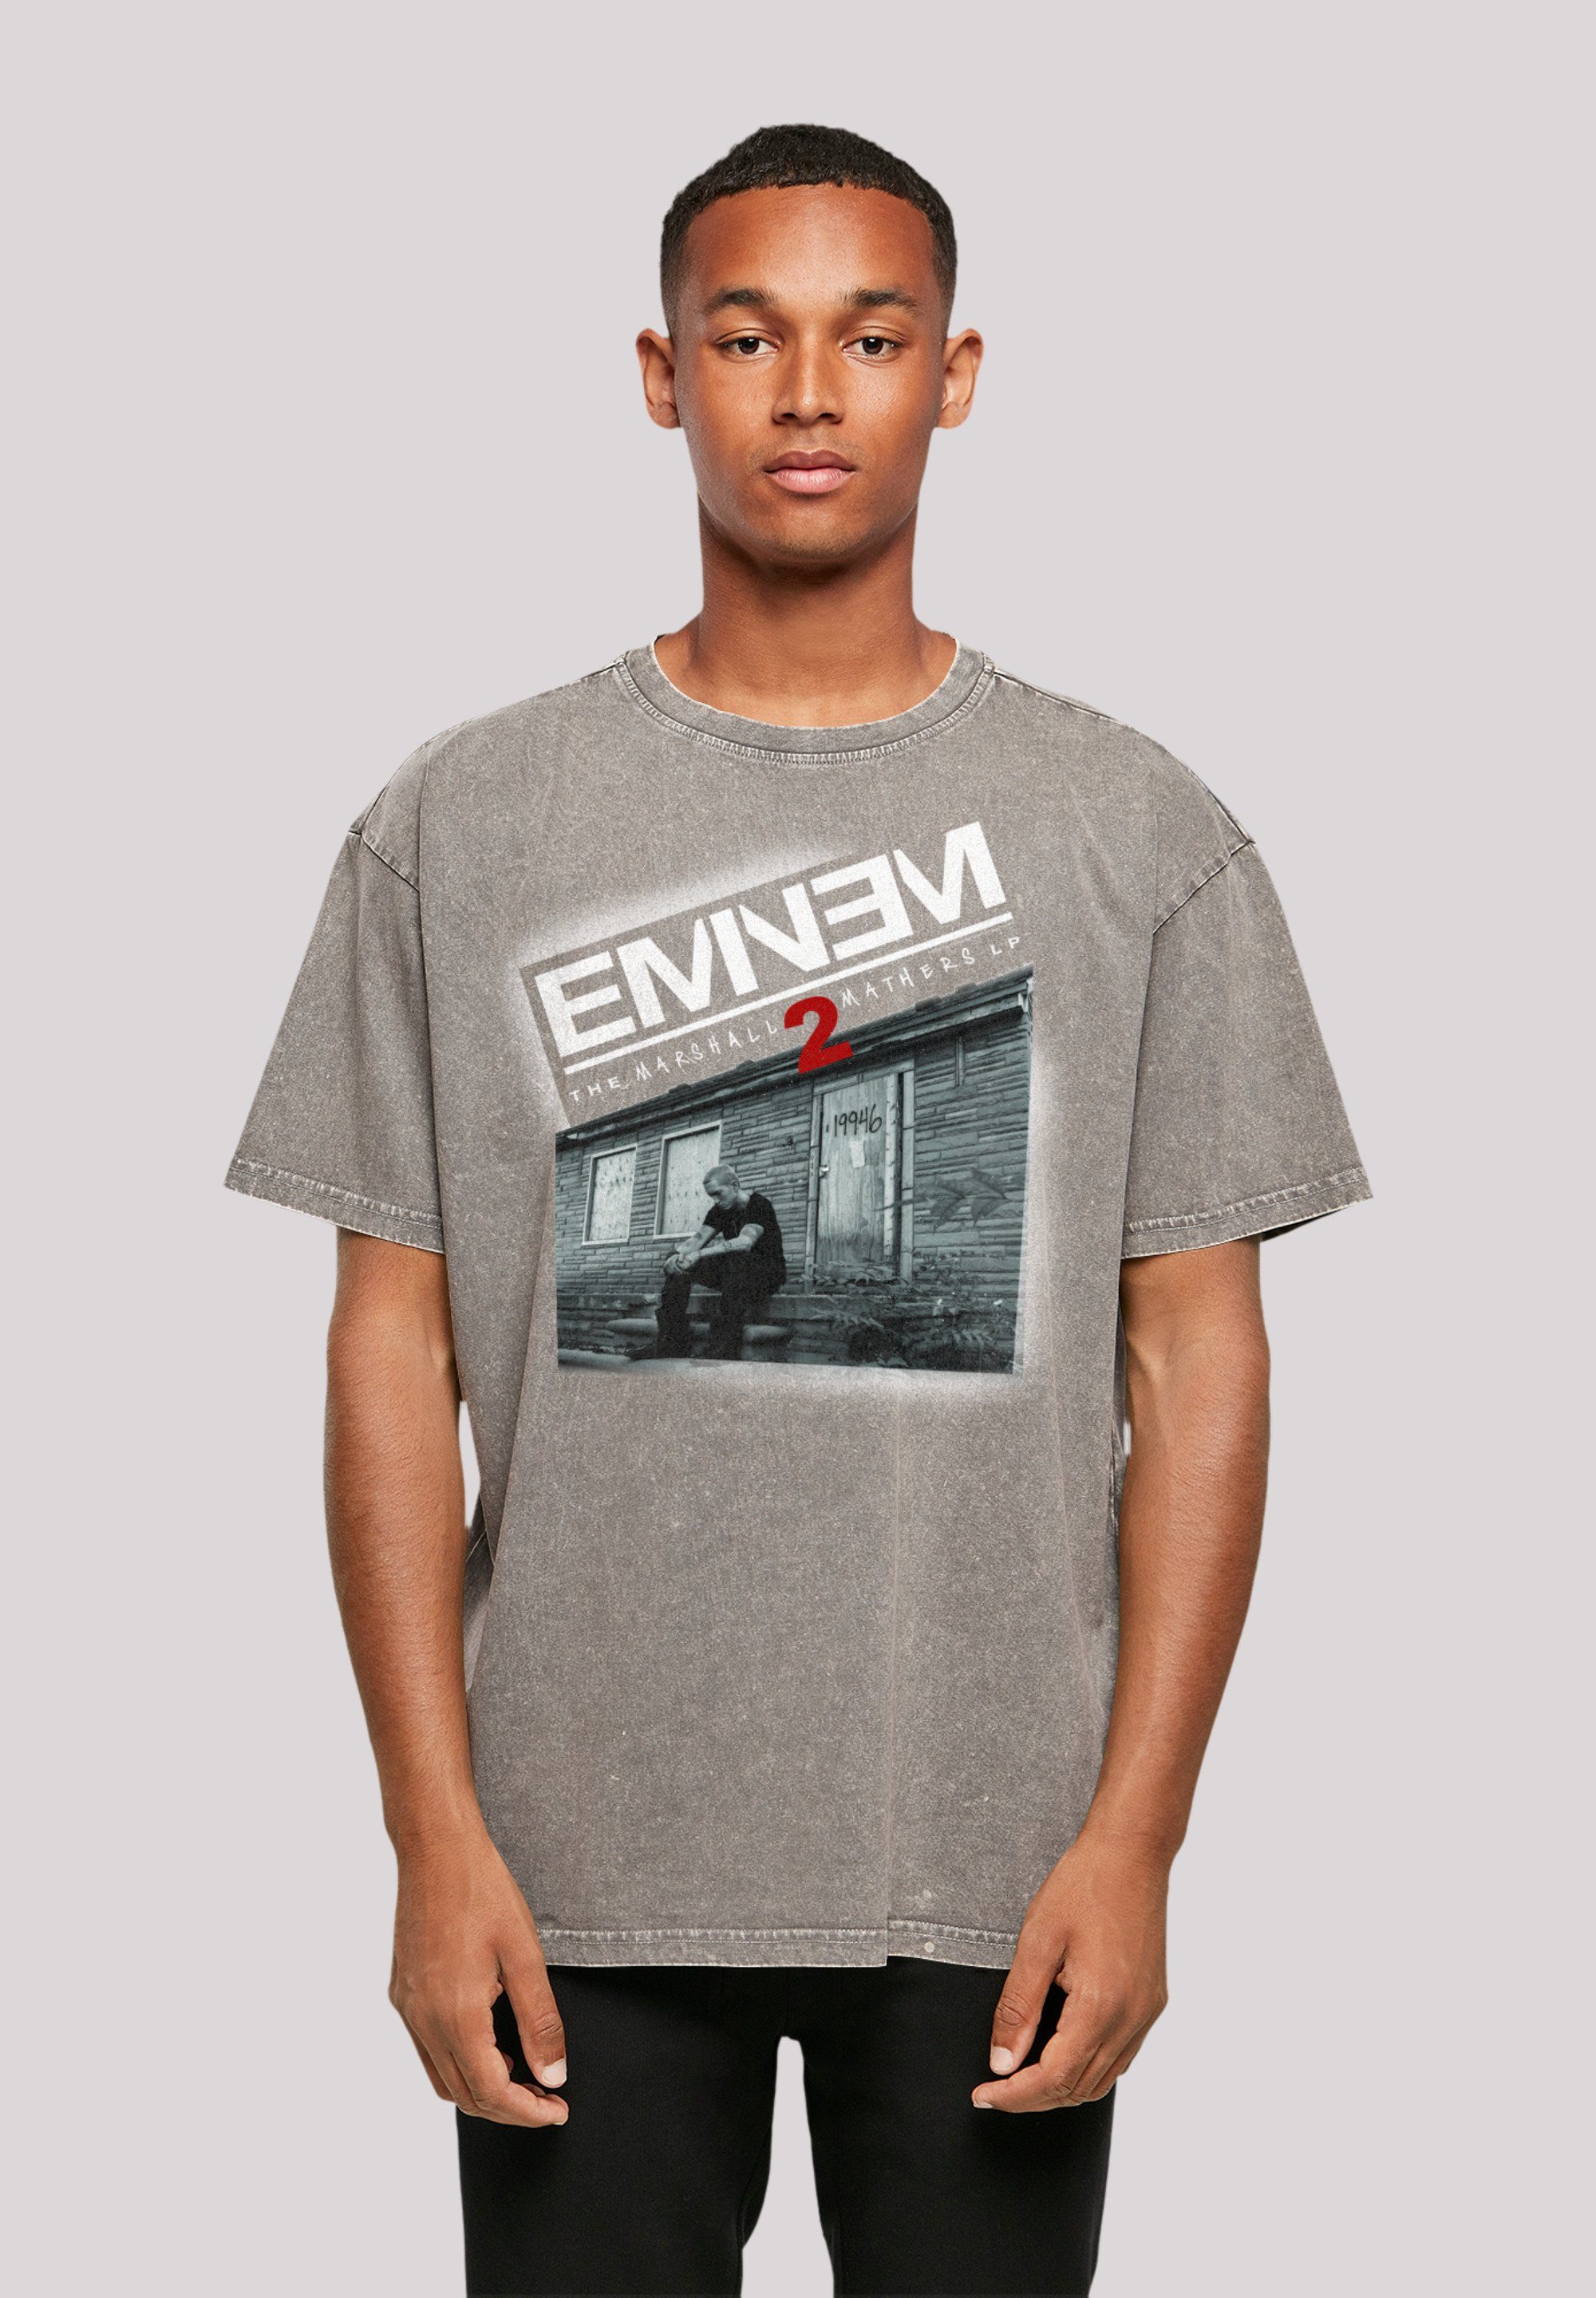 Eminem Premium Marshall Rap Oldschool Qualität, Music Asphalt Mathers F4NT4STIC 2 Musik T-Shirt